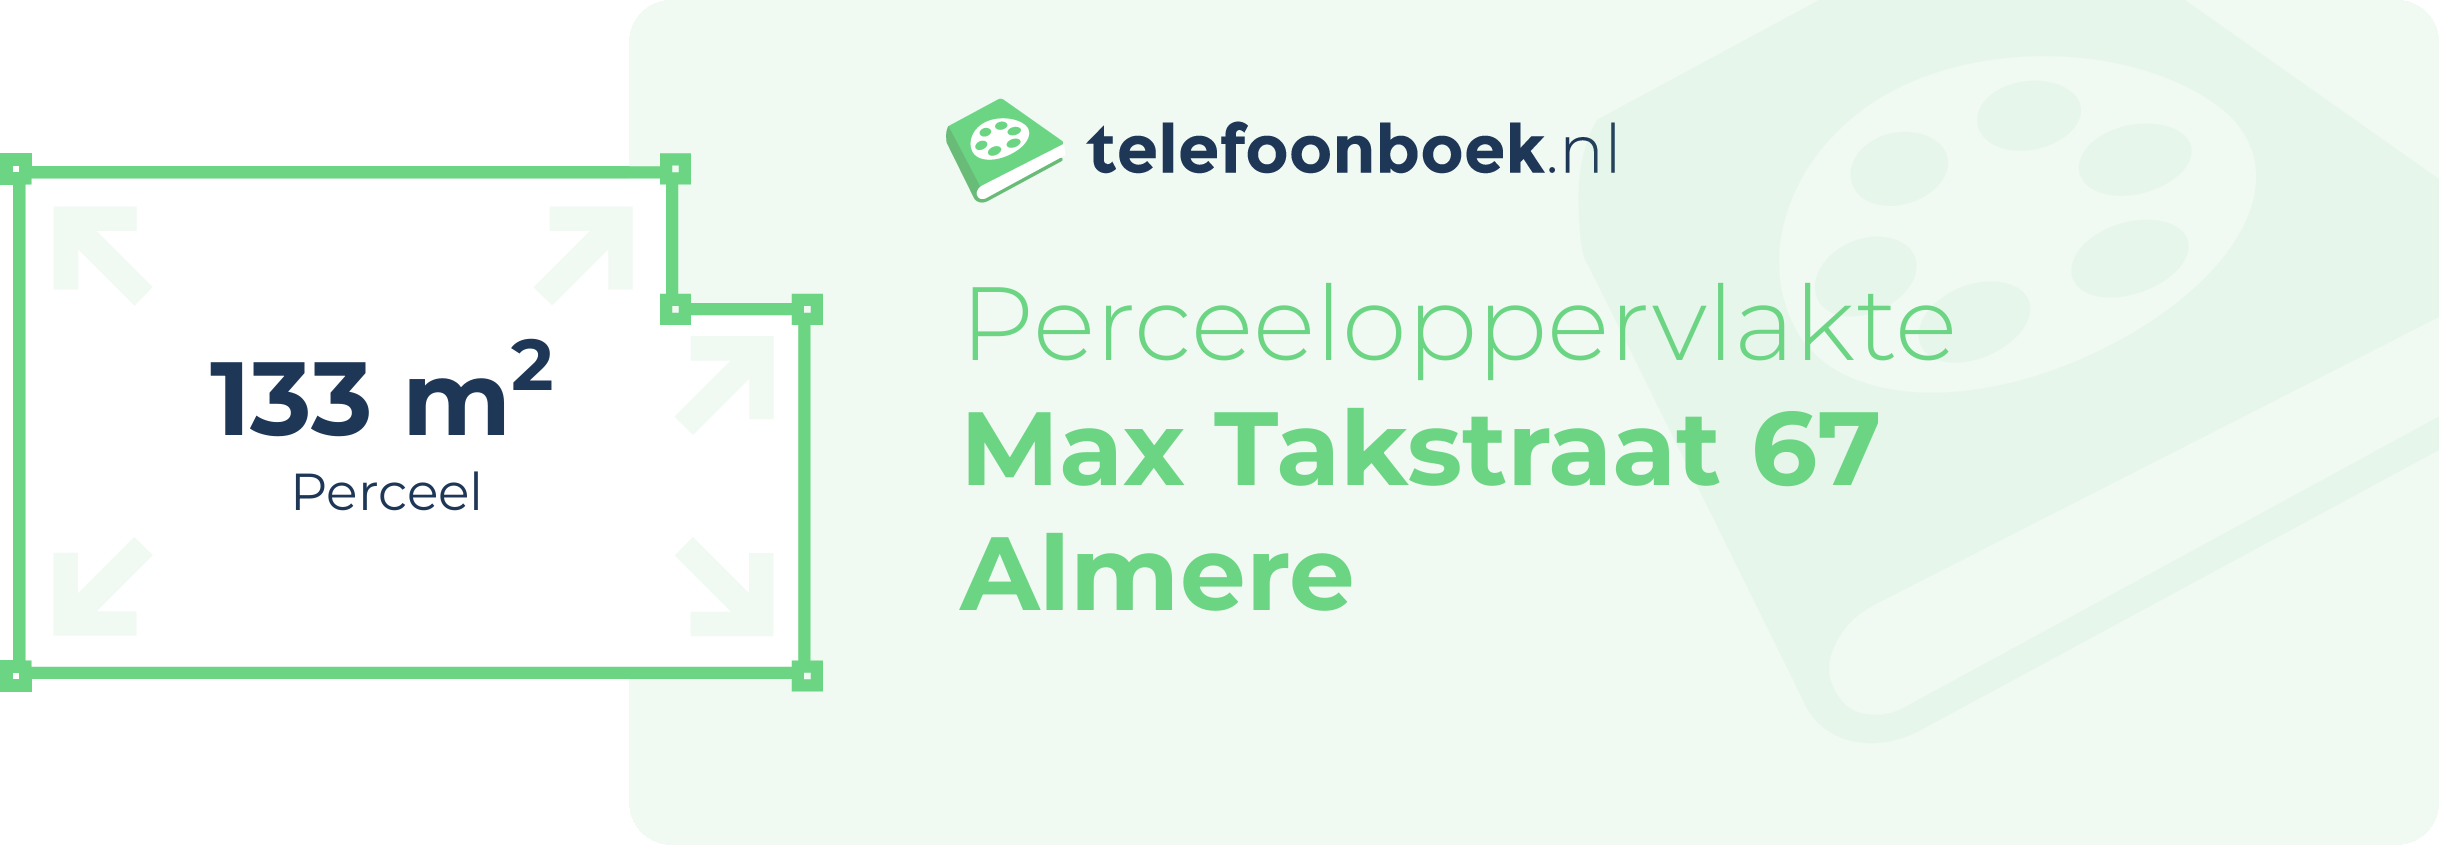 Perceeloppervlakte Max Takstraat 67 Almere